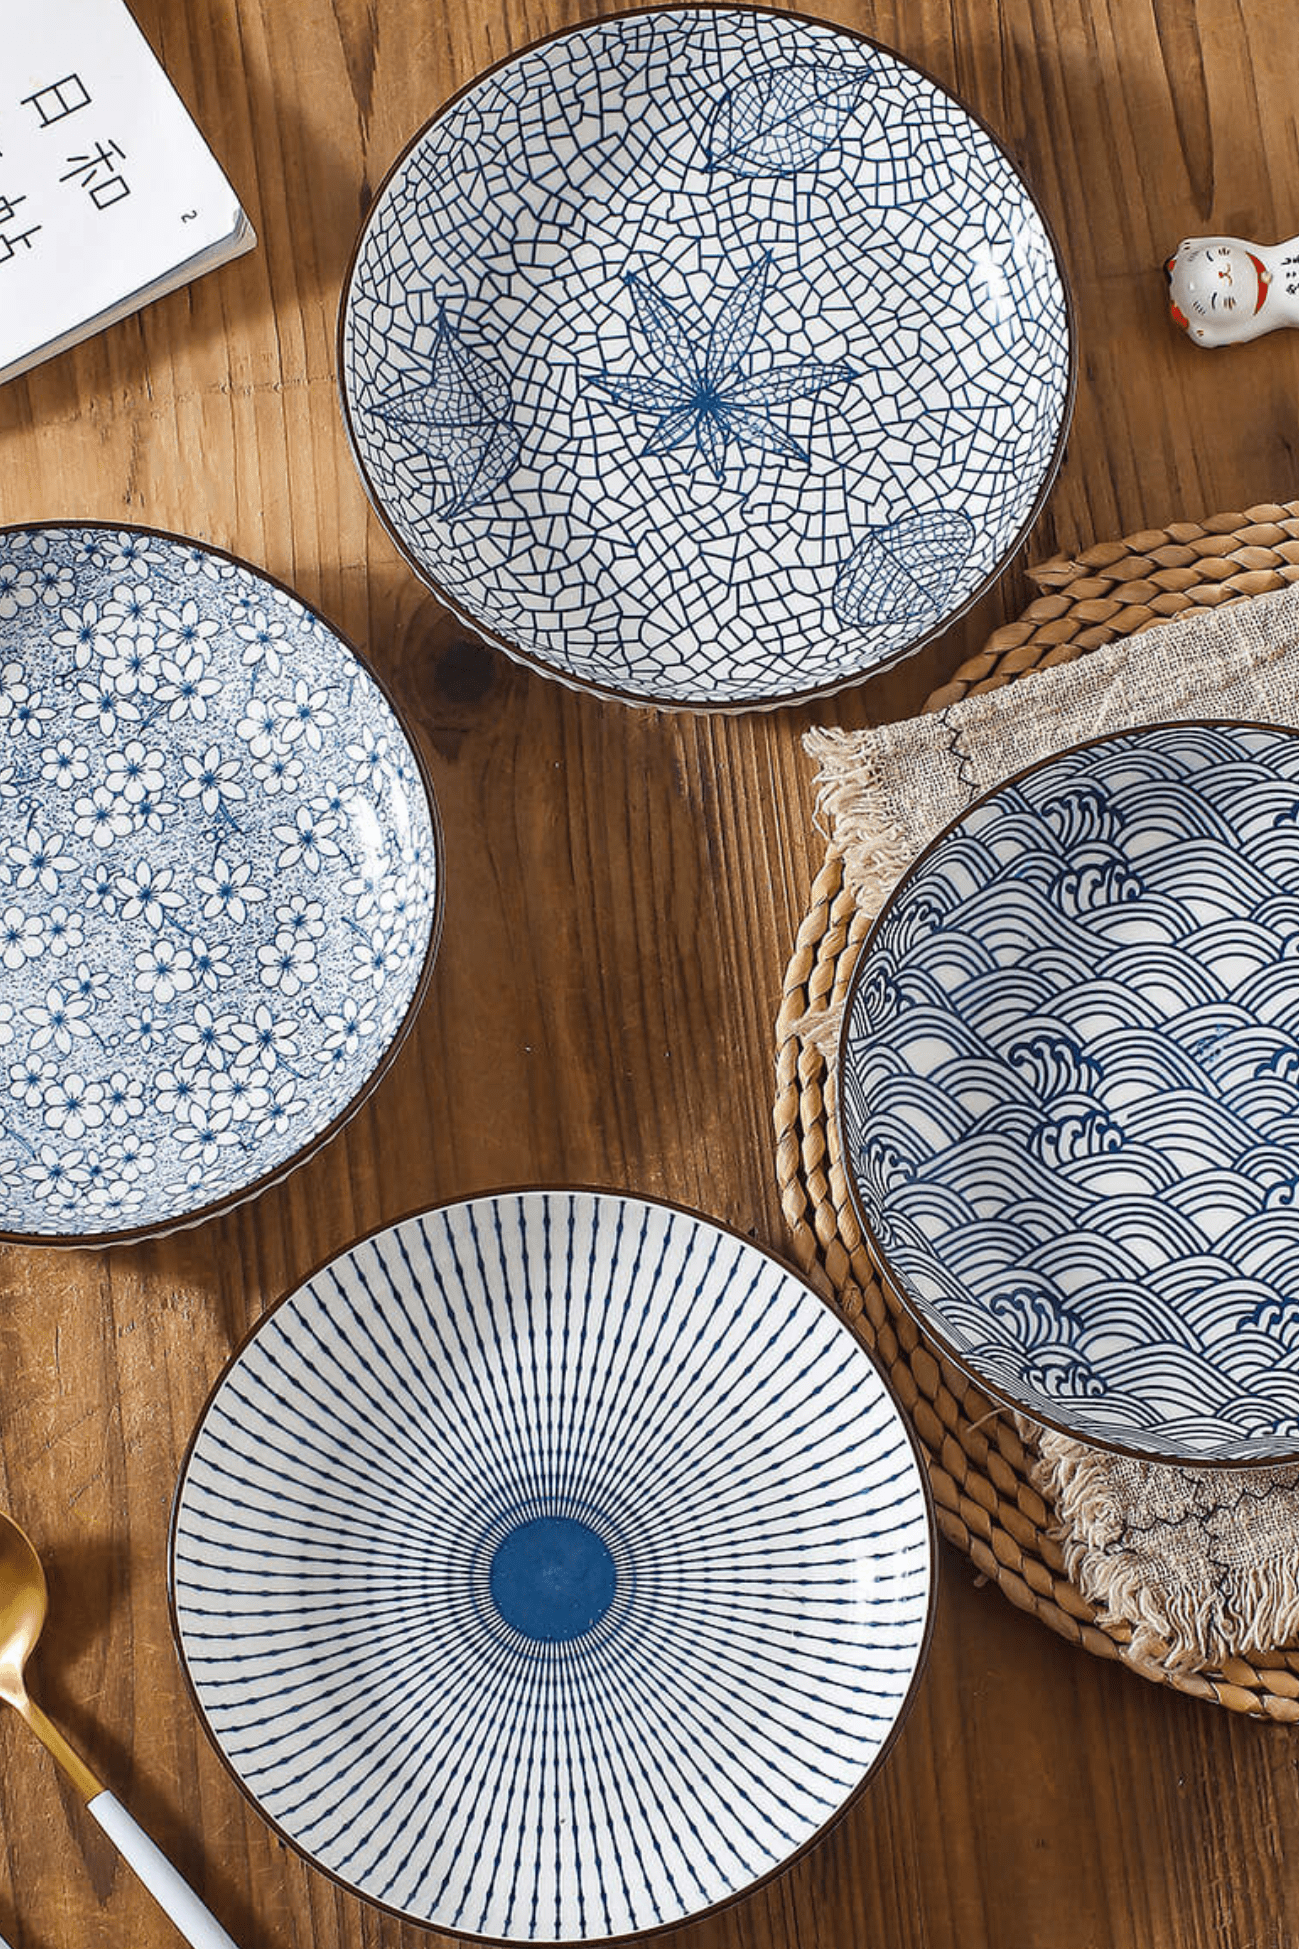 Antiope Design Kishi Set di 4 piatti fondi in porcellana in stile orientale